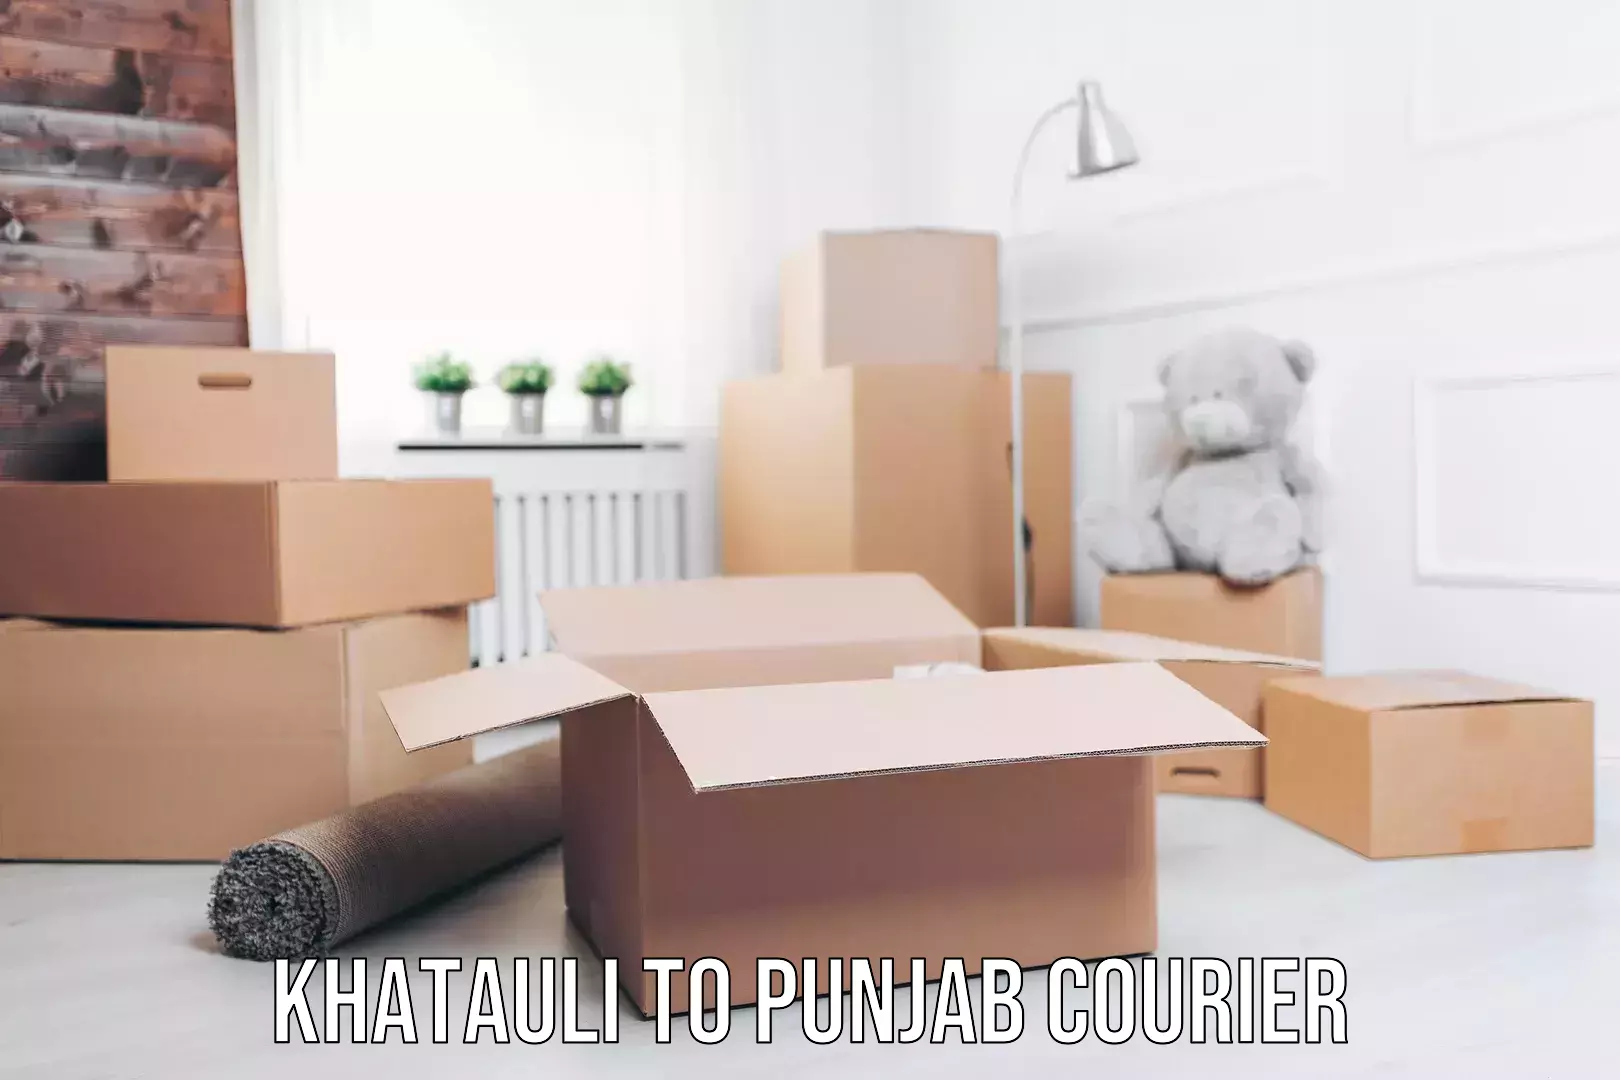 Professional moving company Khatauli to Punjab